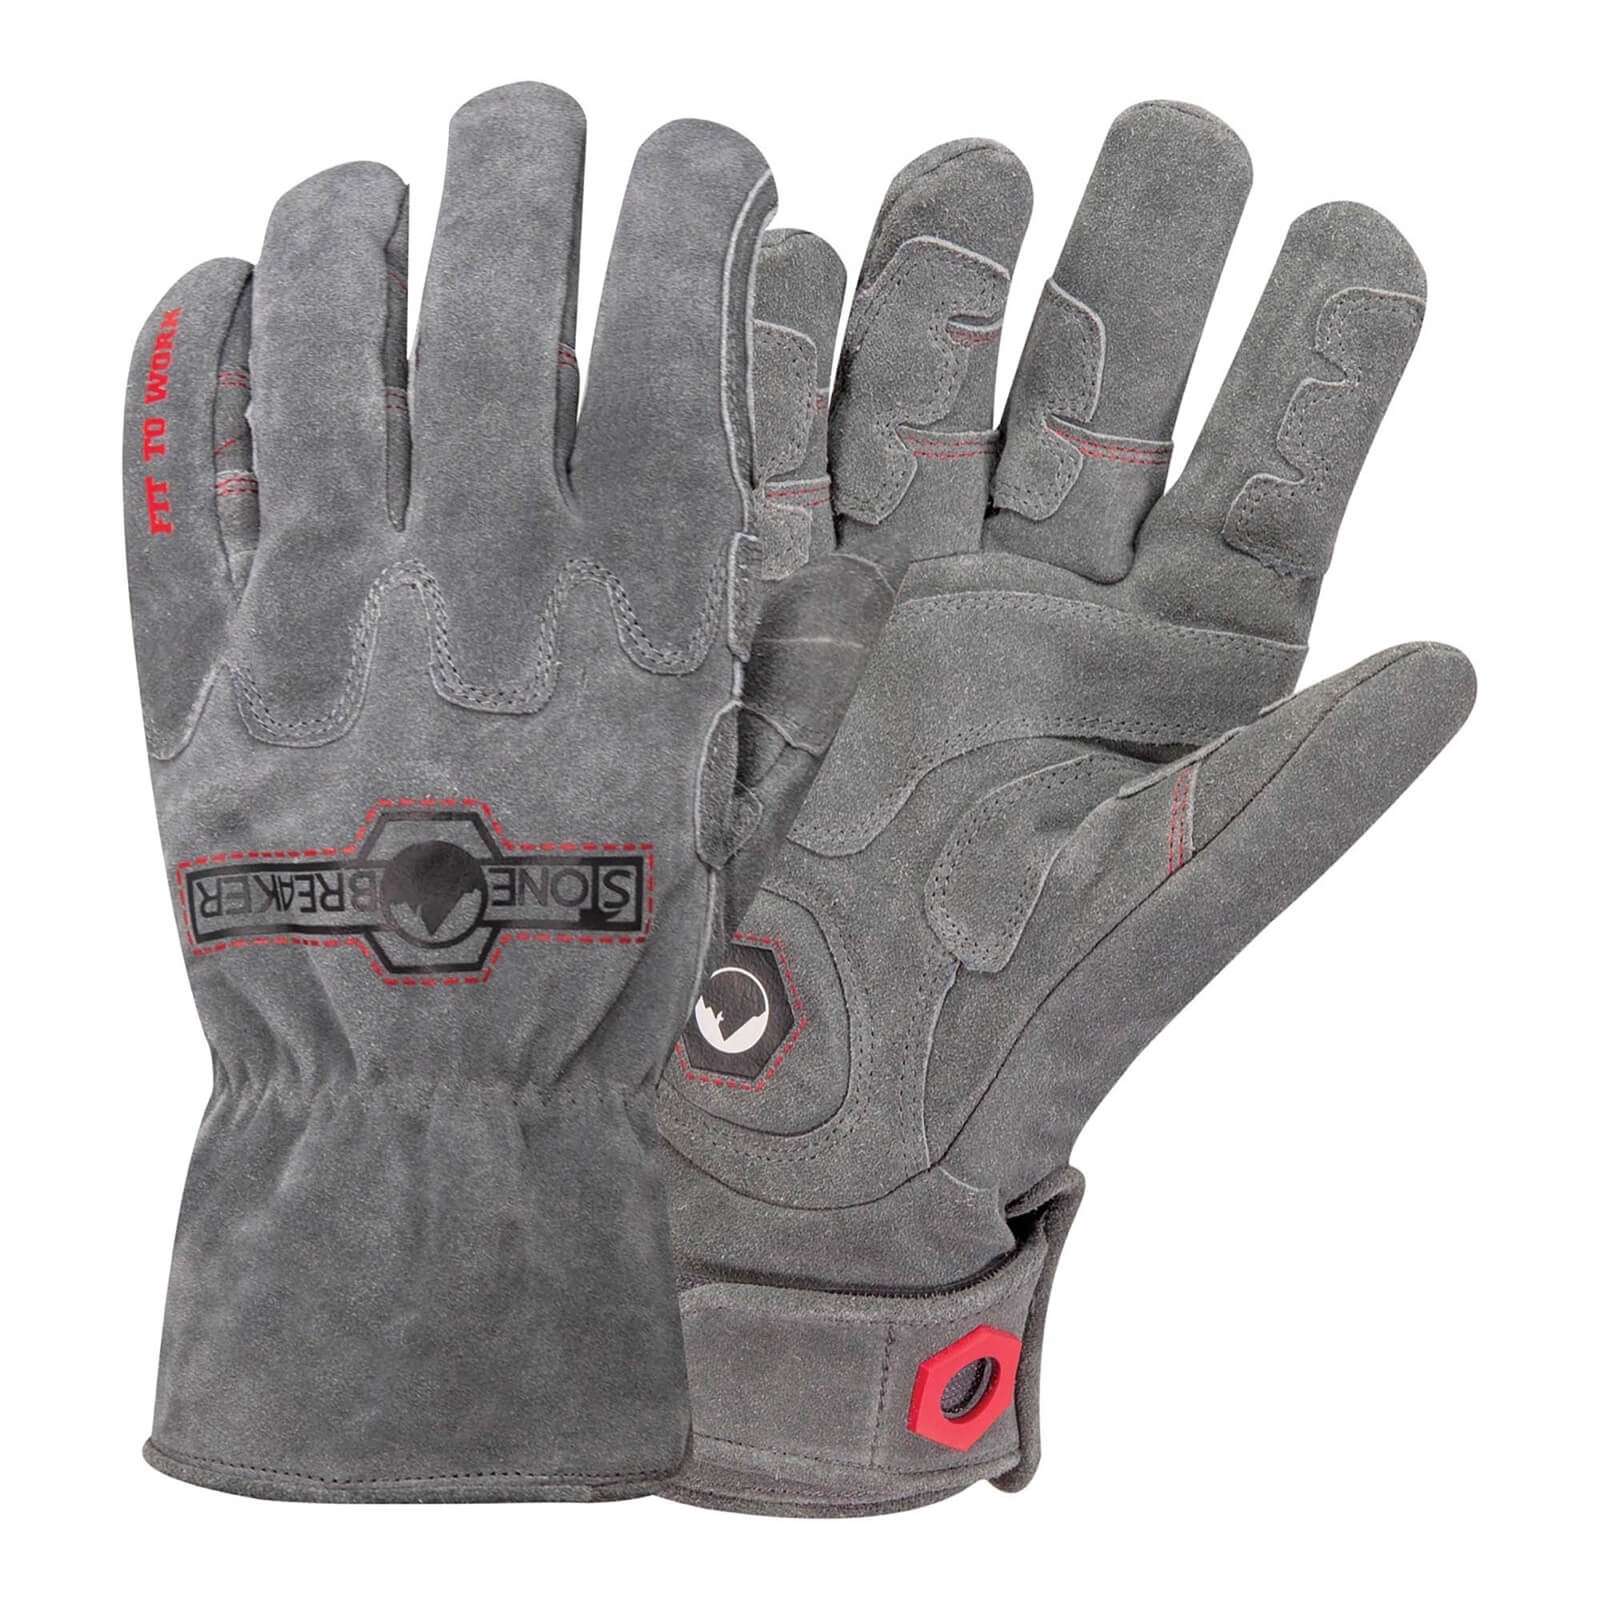 StoneBreaker Trades Winter Demolition Gloves - Large - Grey